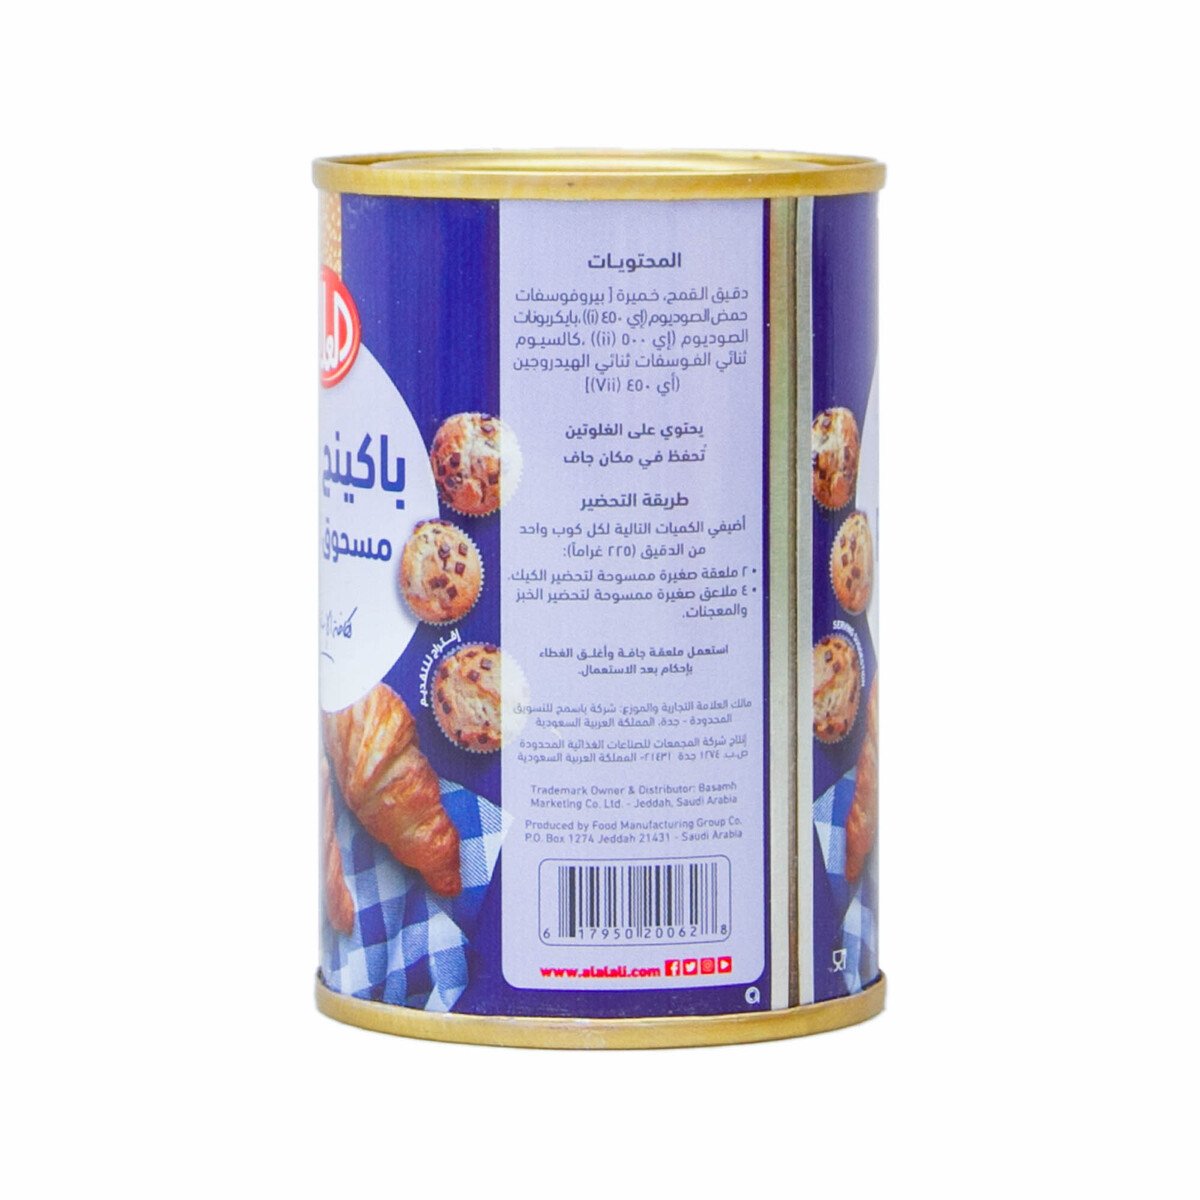 Al Alali Baking Powder 100g